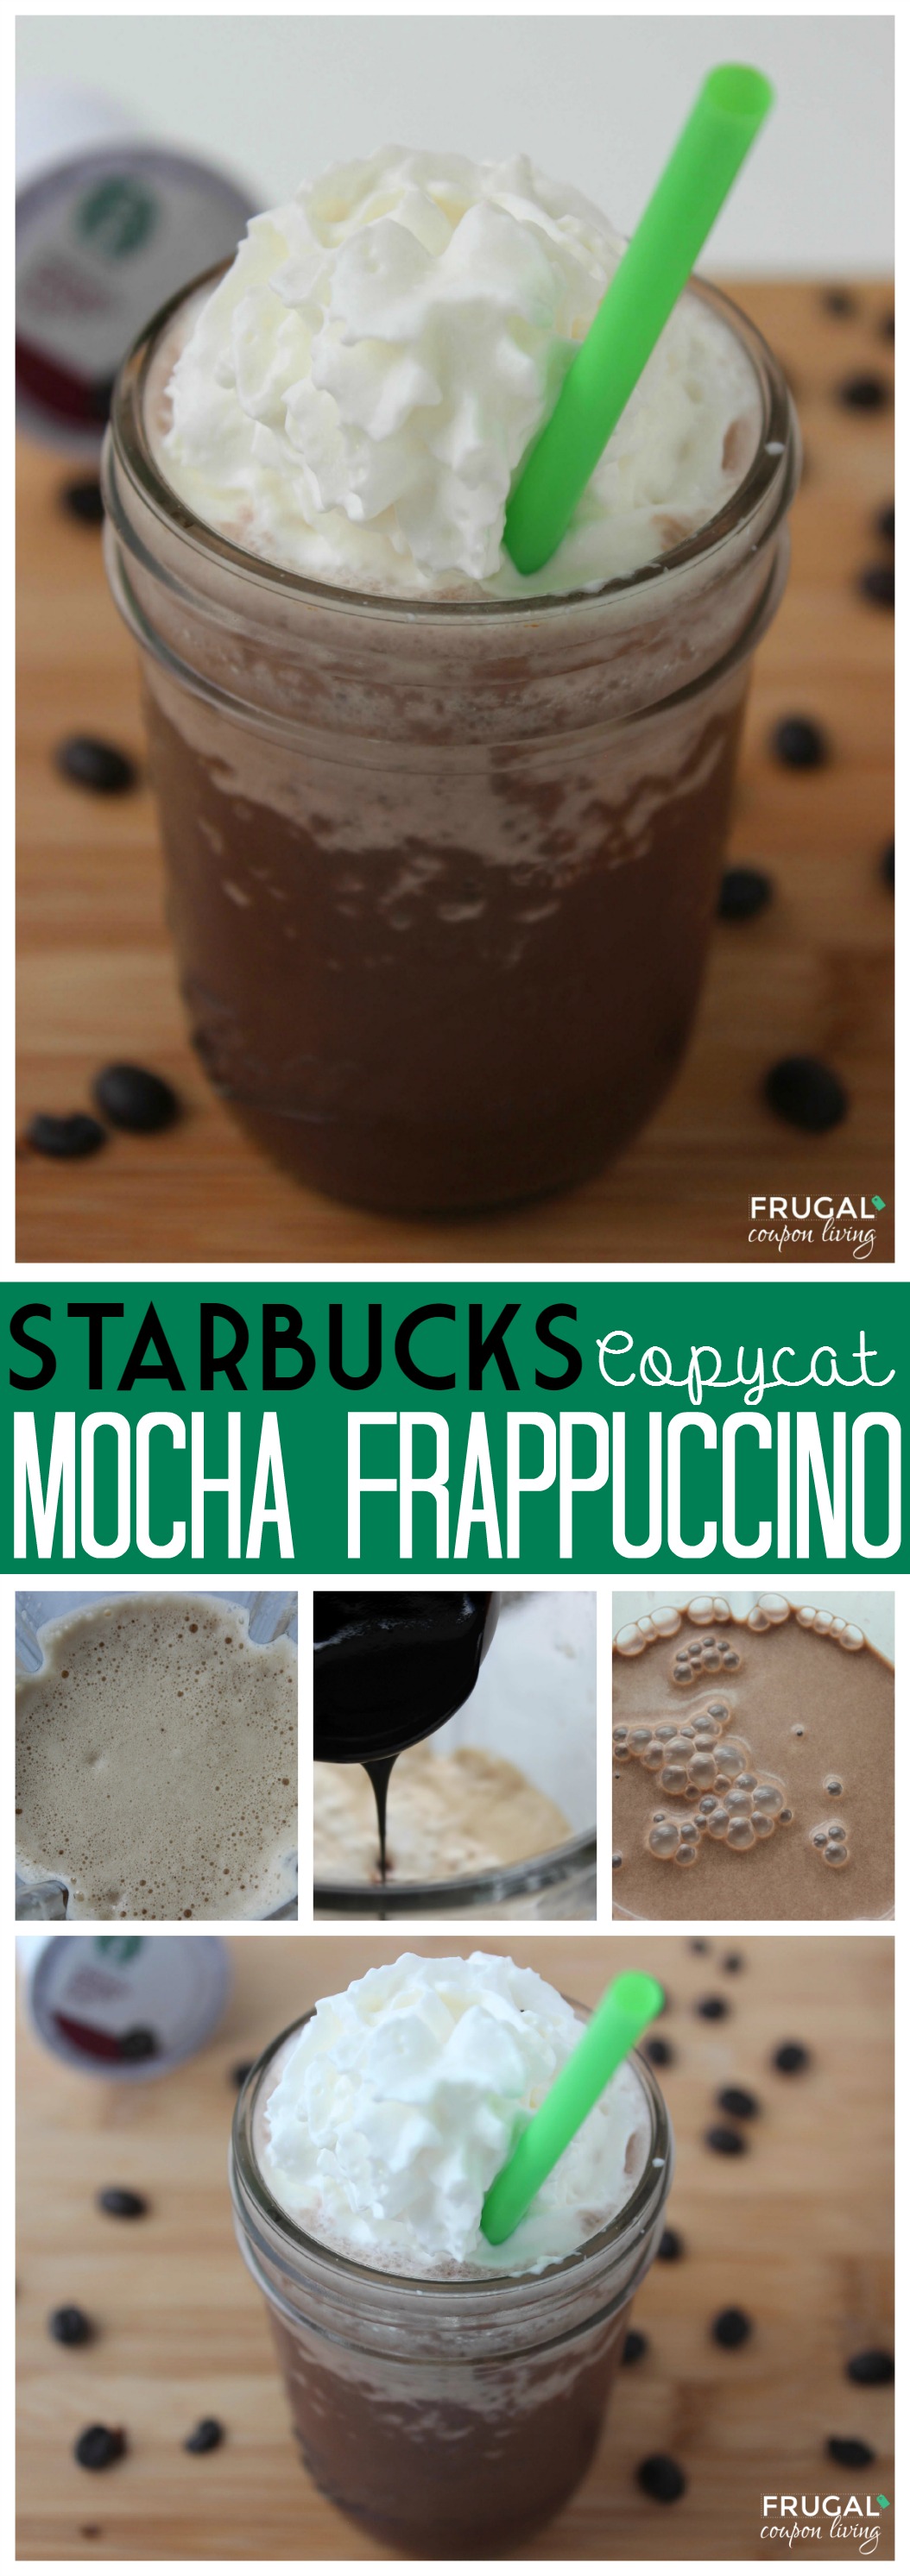 copycat-starbucks-mocha-frappuccino-Collage